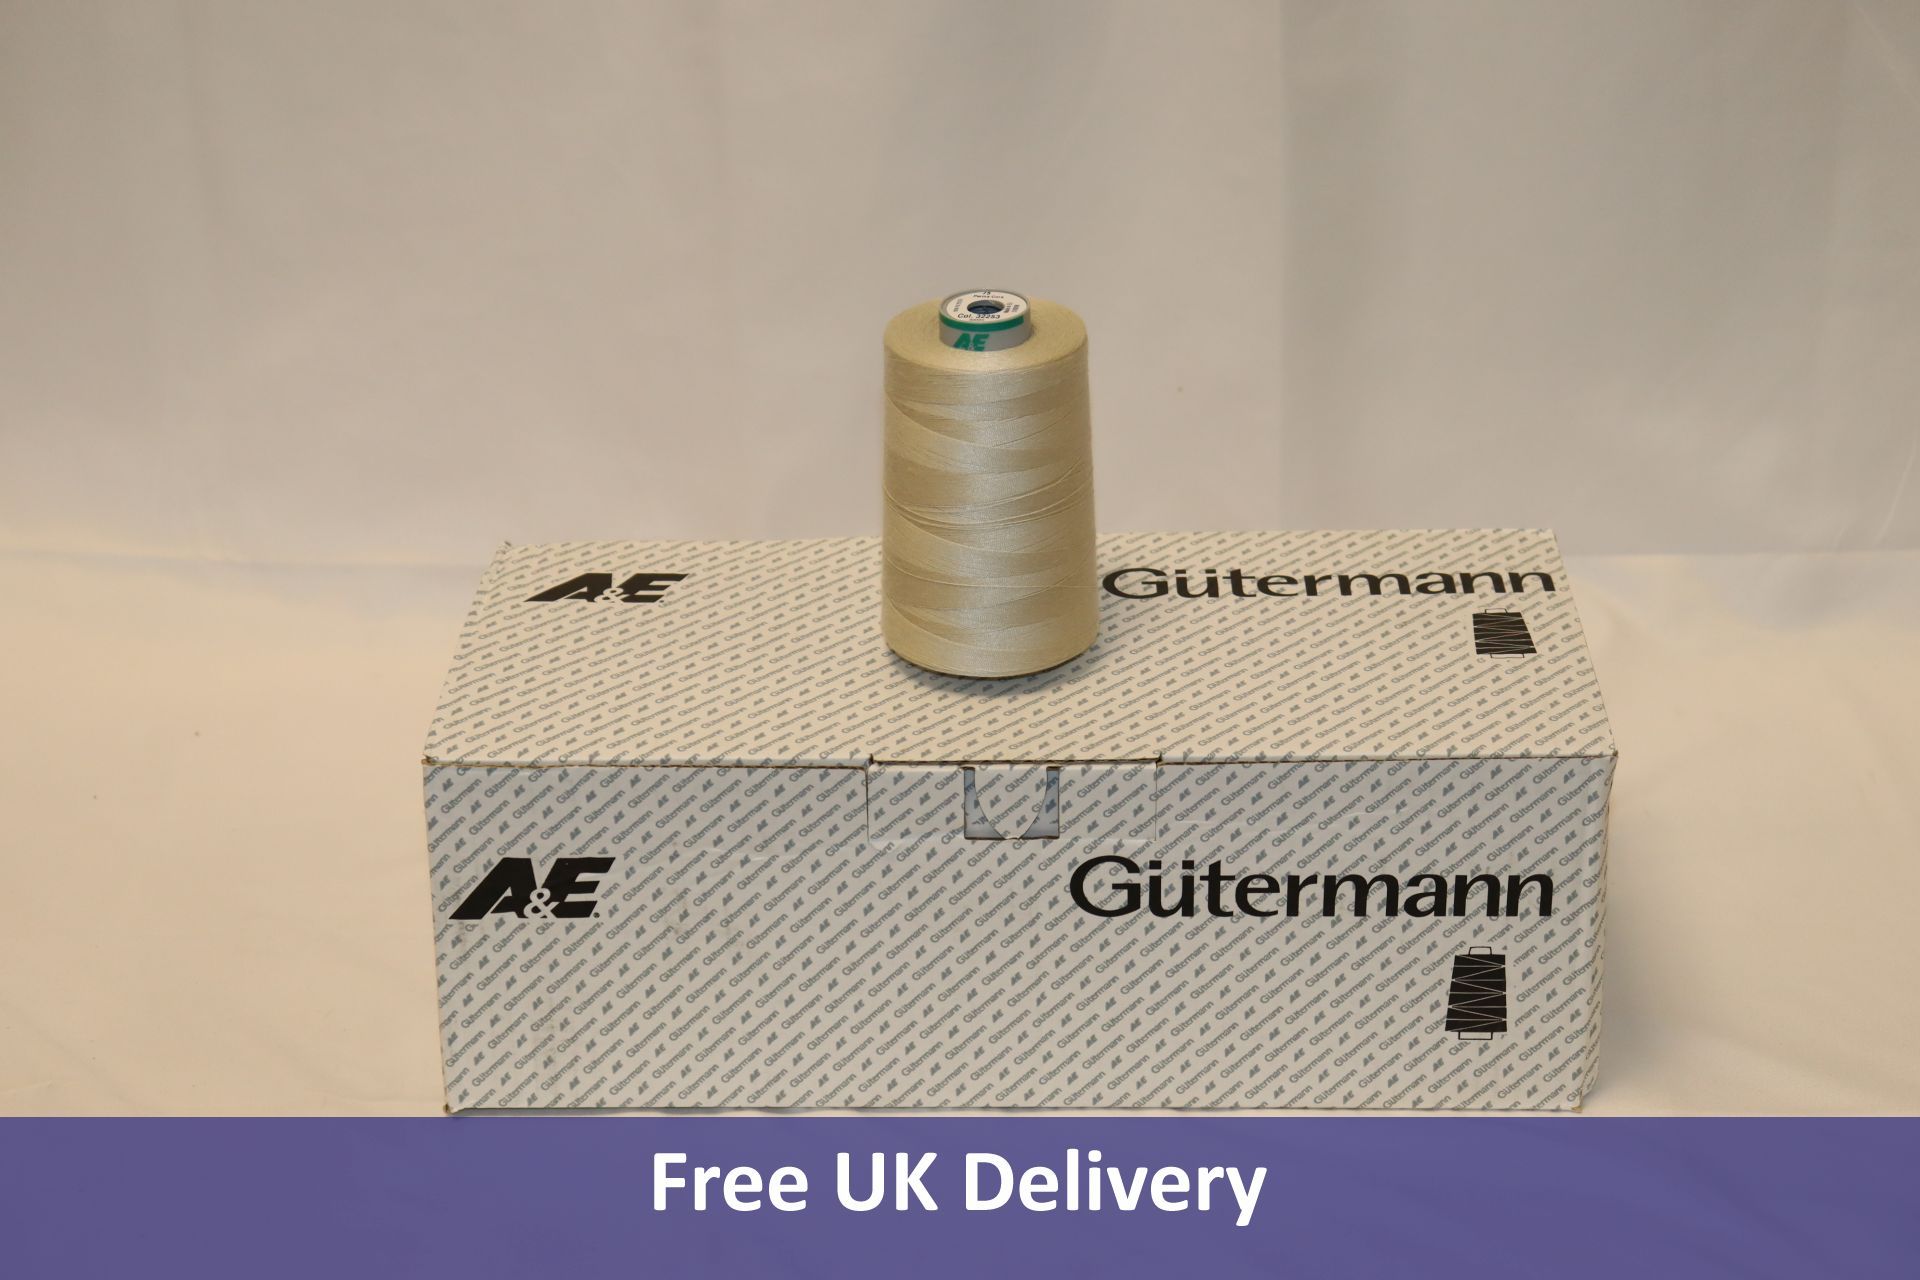 Sixty Rolls Gutermann Perma-core 75 Thread, for Denim and heavy duty seams, 44500